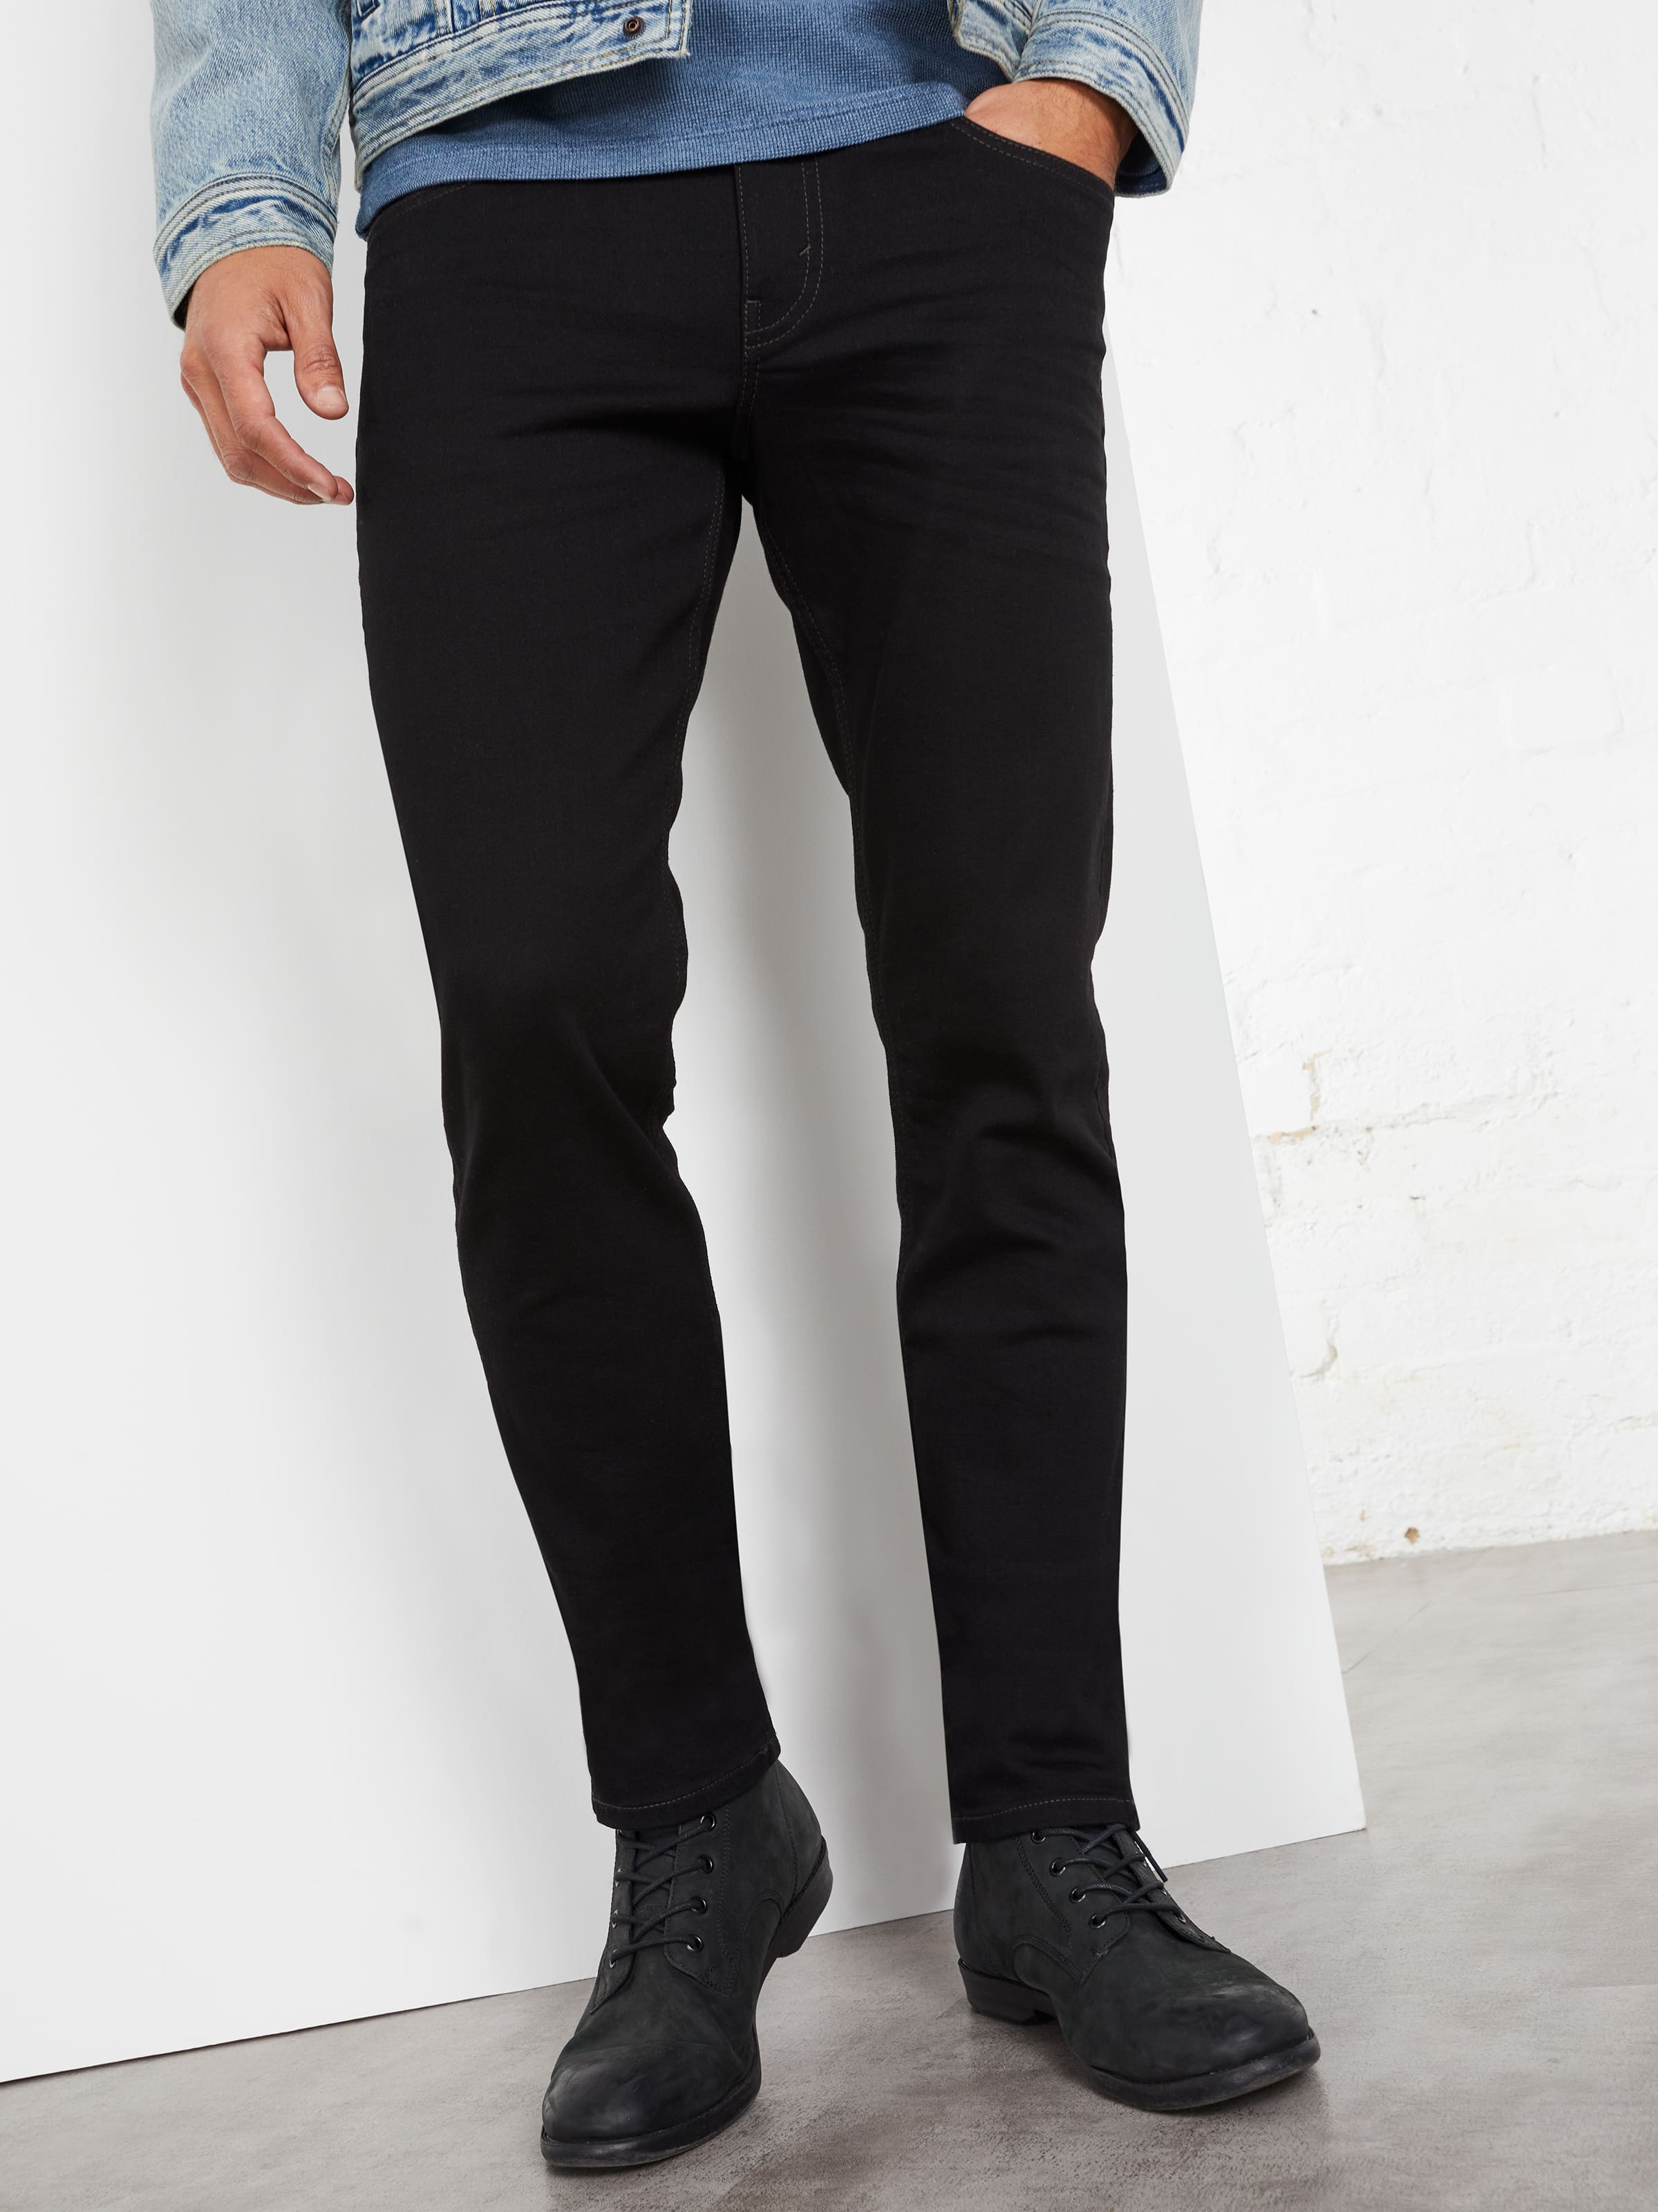 Leroy Slim Tapered Leg - Just Jeans Online